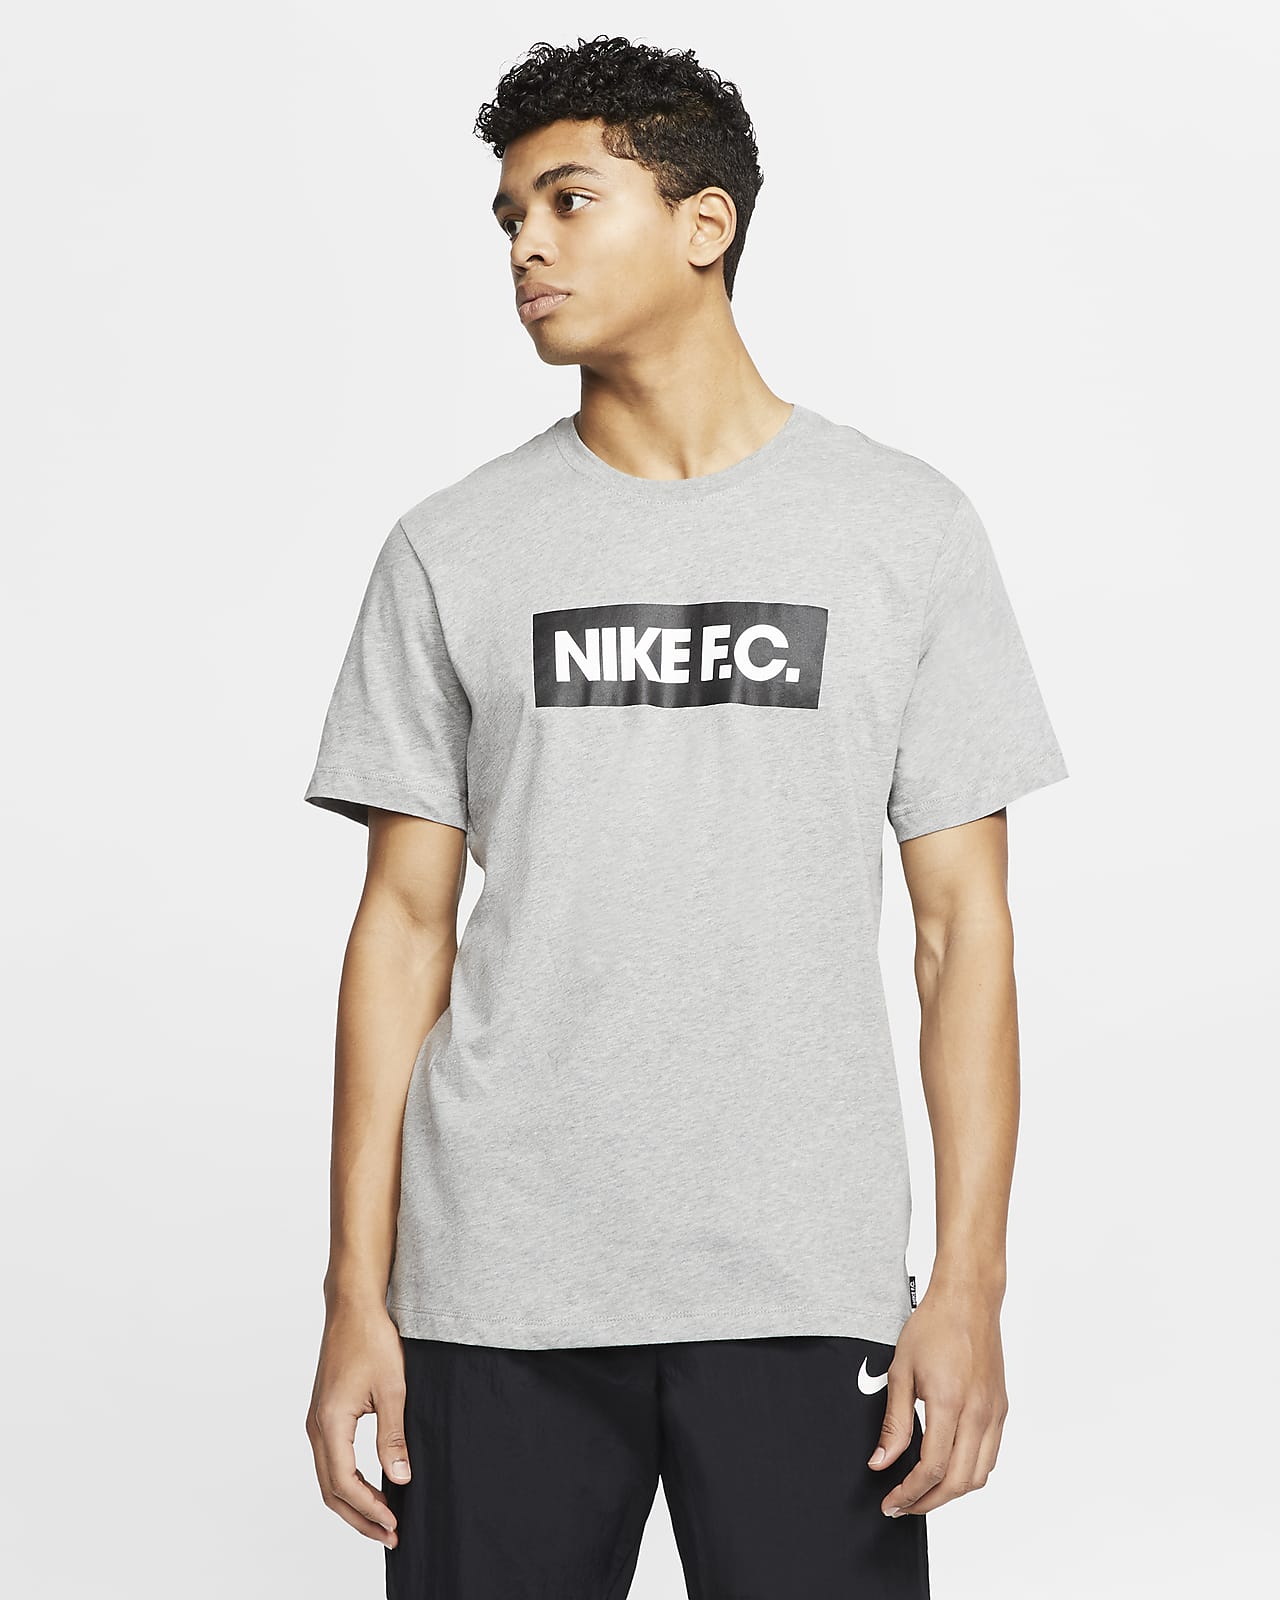 Nike F.C. SE11 Men's Football T-Shirt. Nike EG